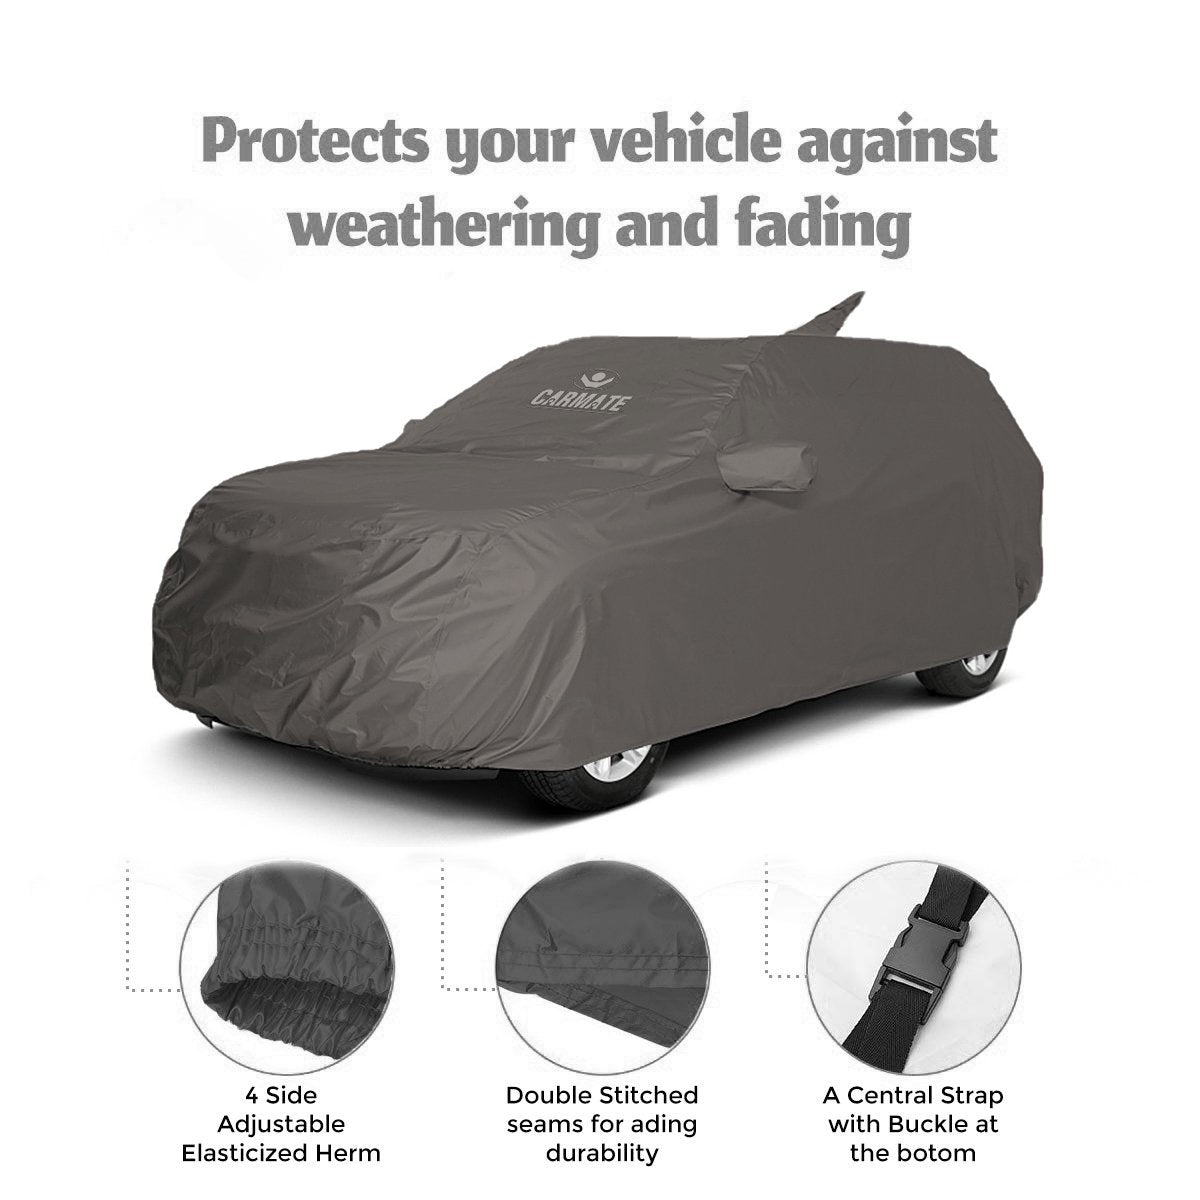 Carmate Car Body Cover 100% Waterproof Pride (Grey) for BMW - 320D - CARMATE®